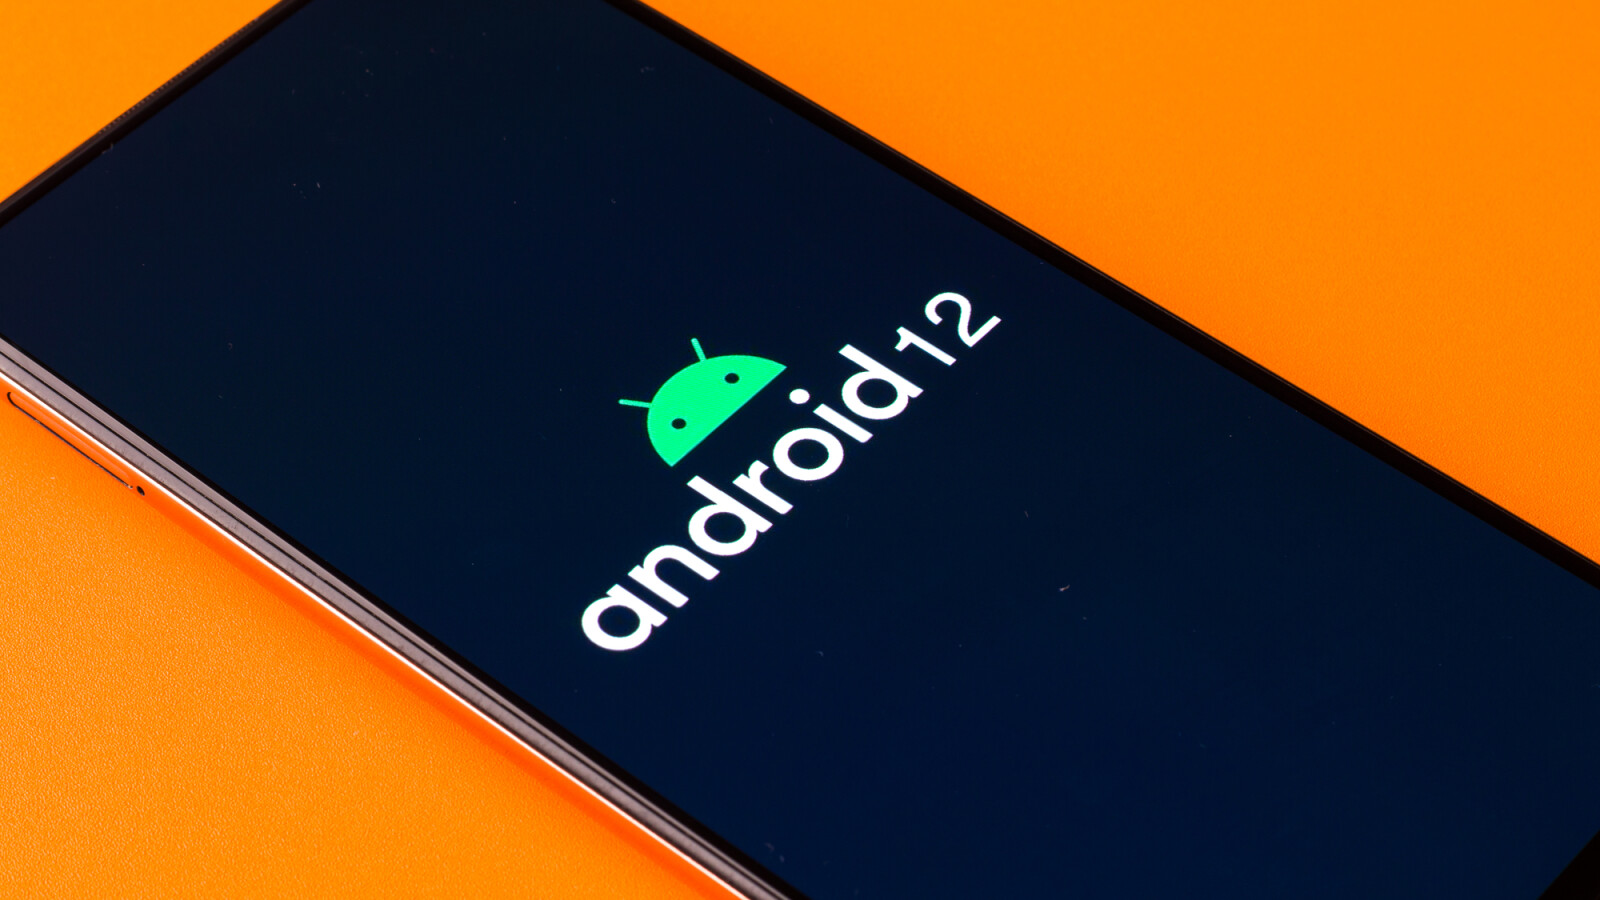 Easter Egg in Android 12: Geheime Widget aktivieren - so geht's